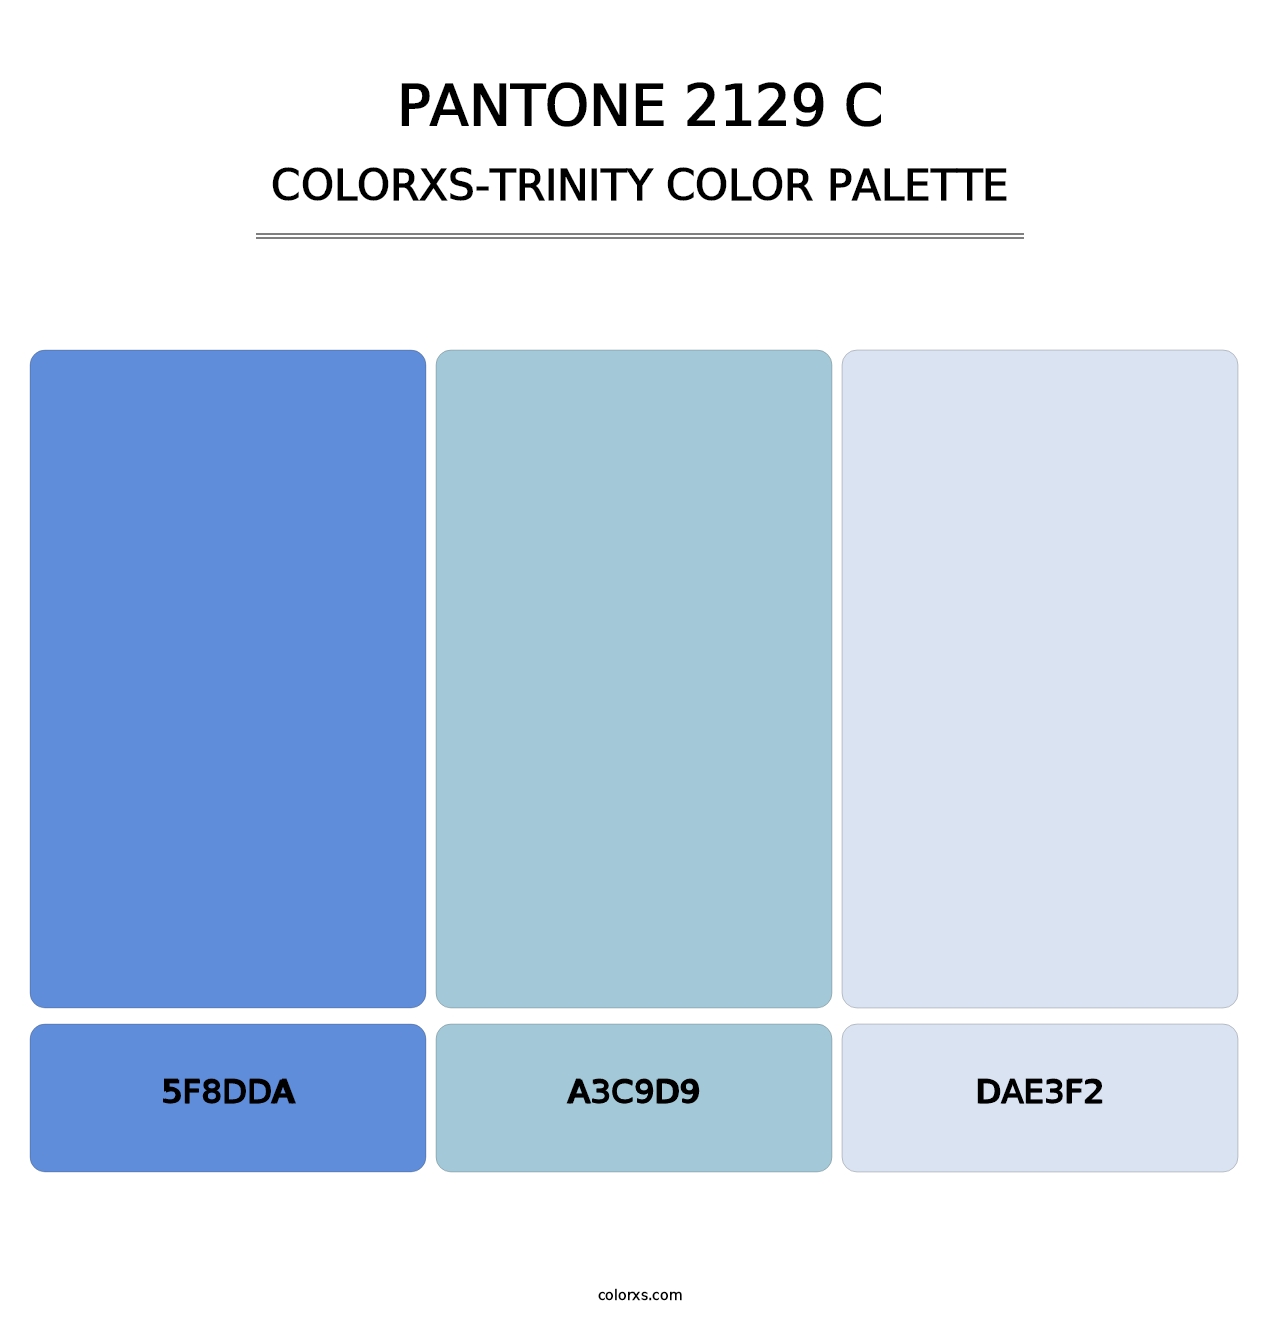 PANTONE 2129 C - Colorxs Trinity Palette